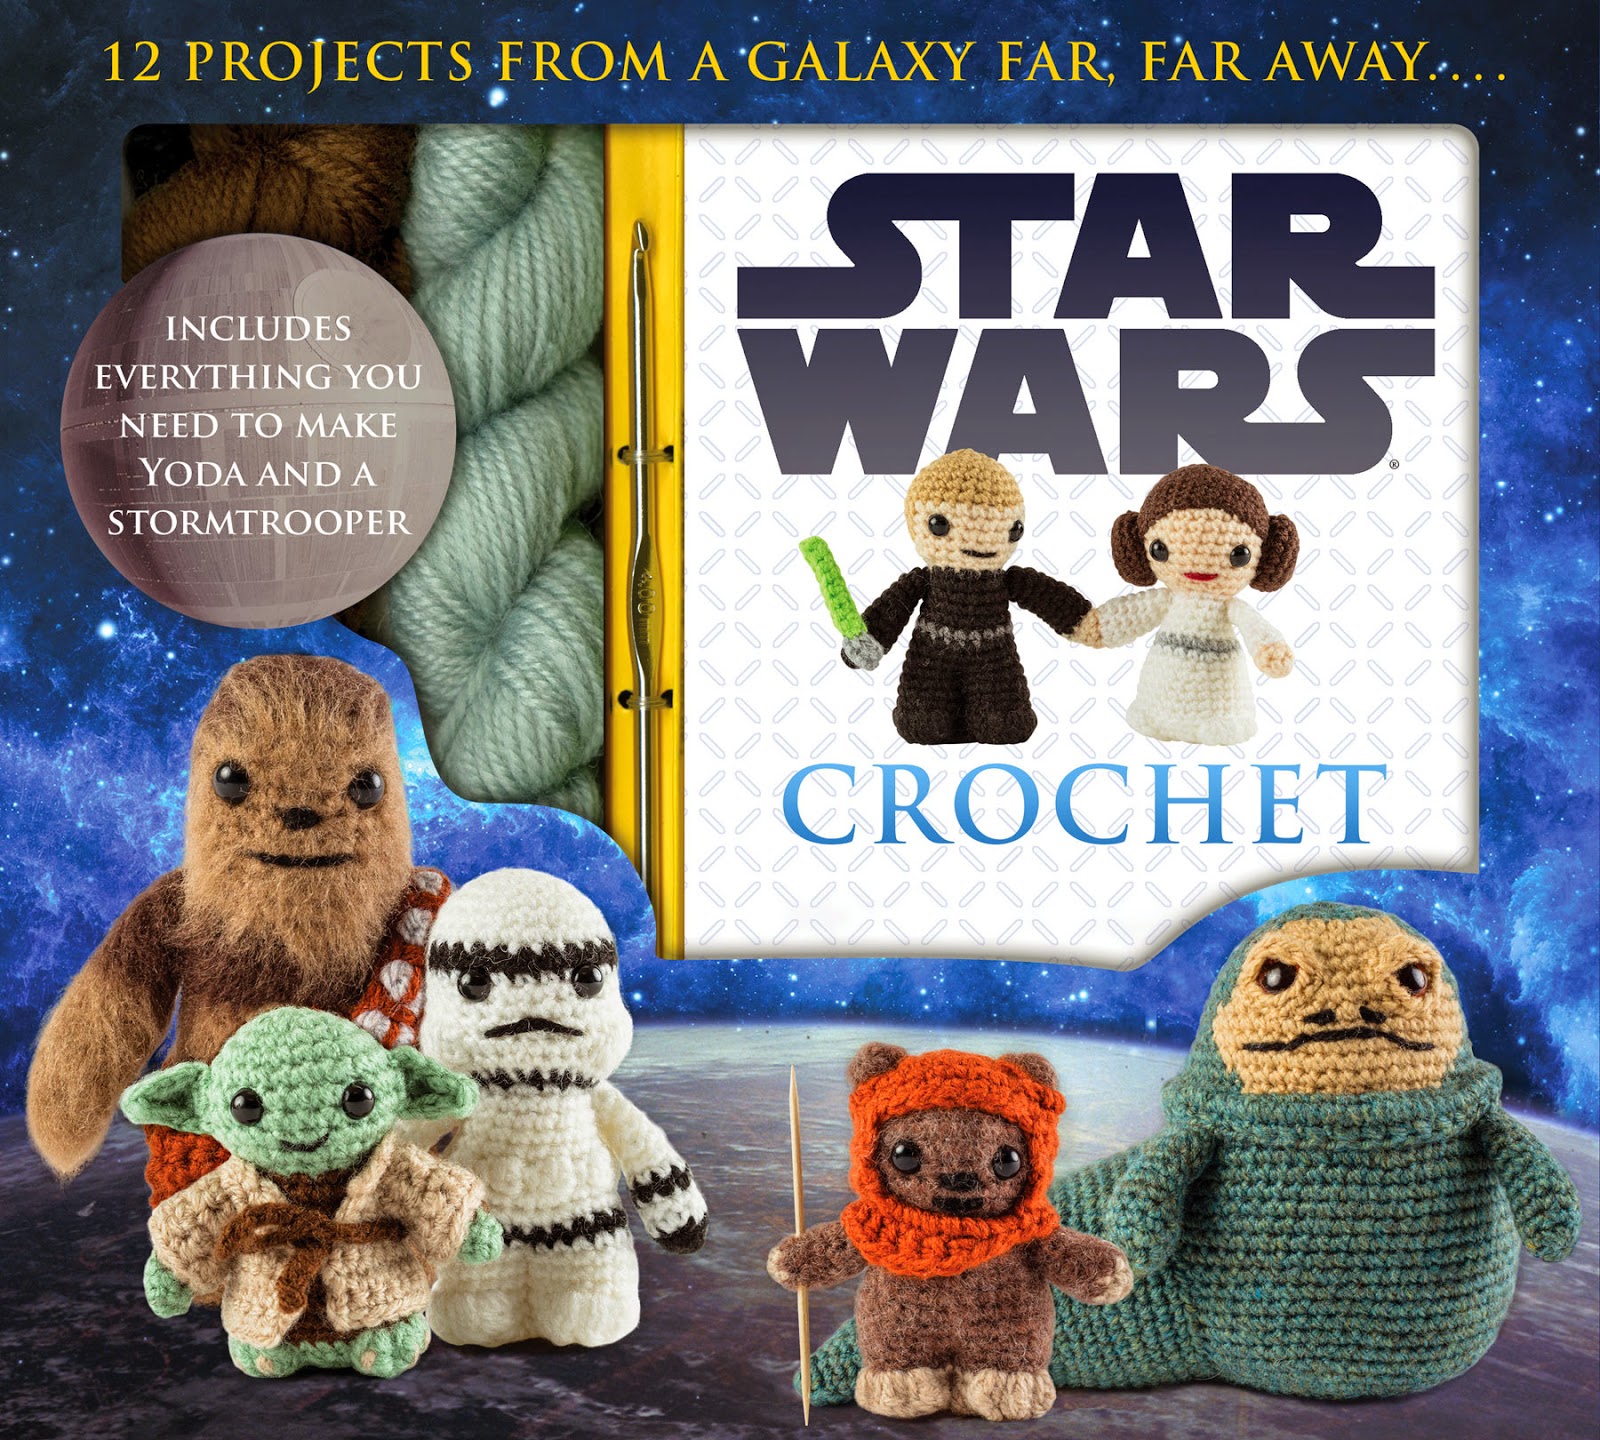 LucyRavenscar - Crochet Creatures: Star Wars Crochet Kit